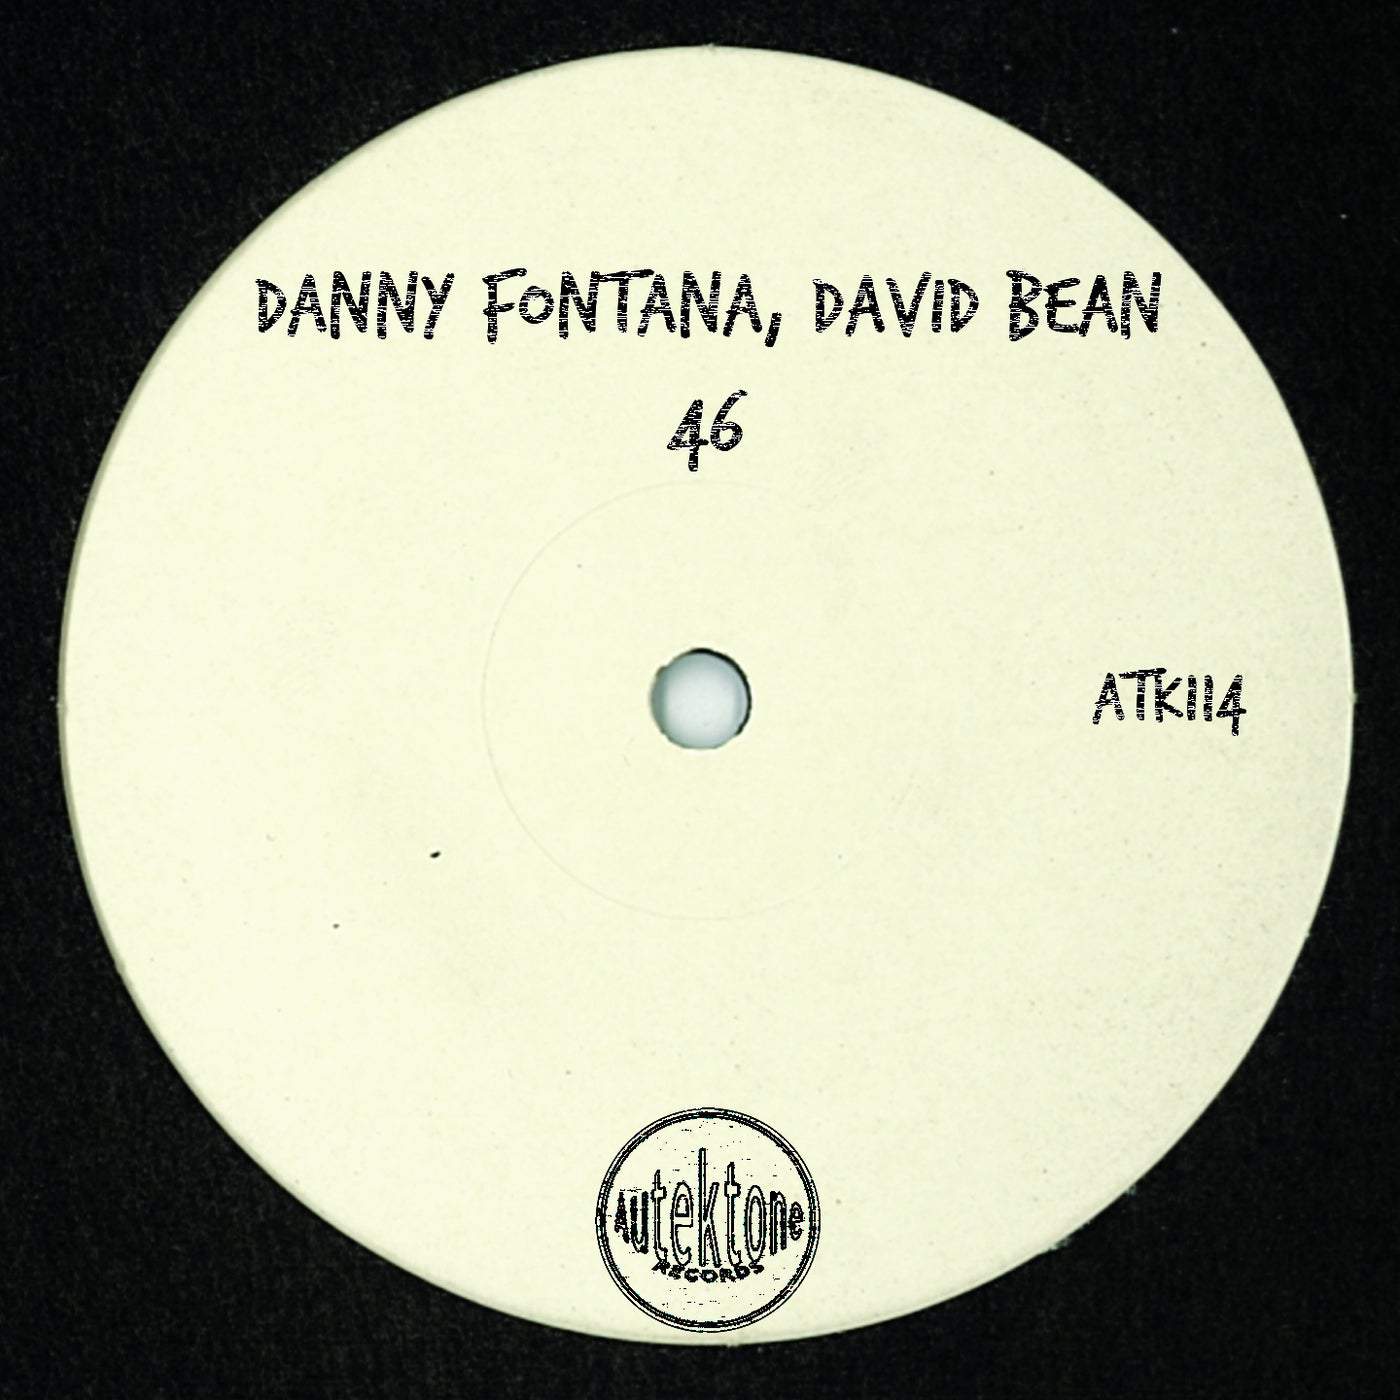 Download Danny Fontana, David Bean - 46 [ATK114] on Electrobuzz